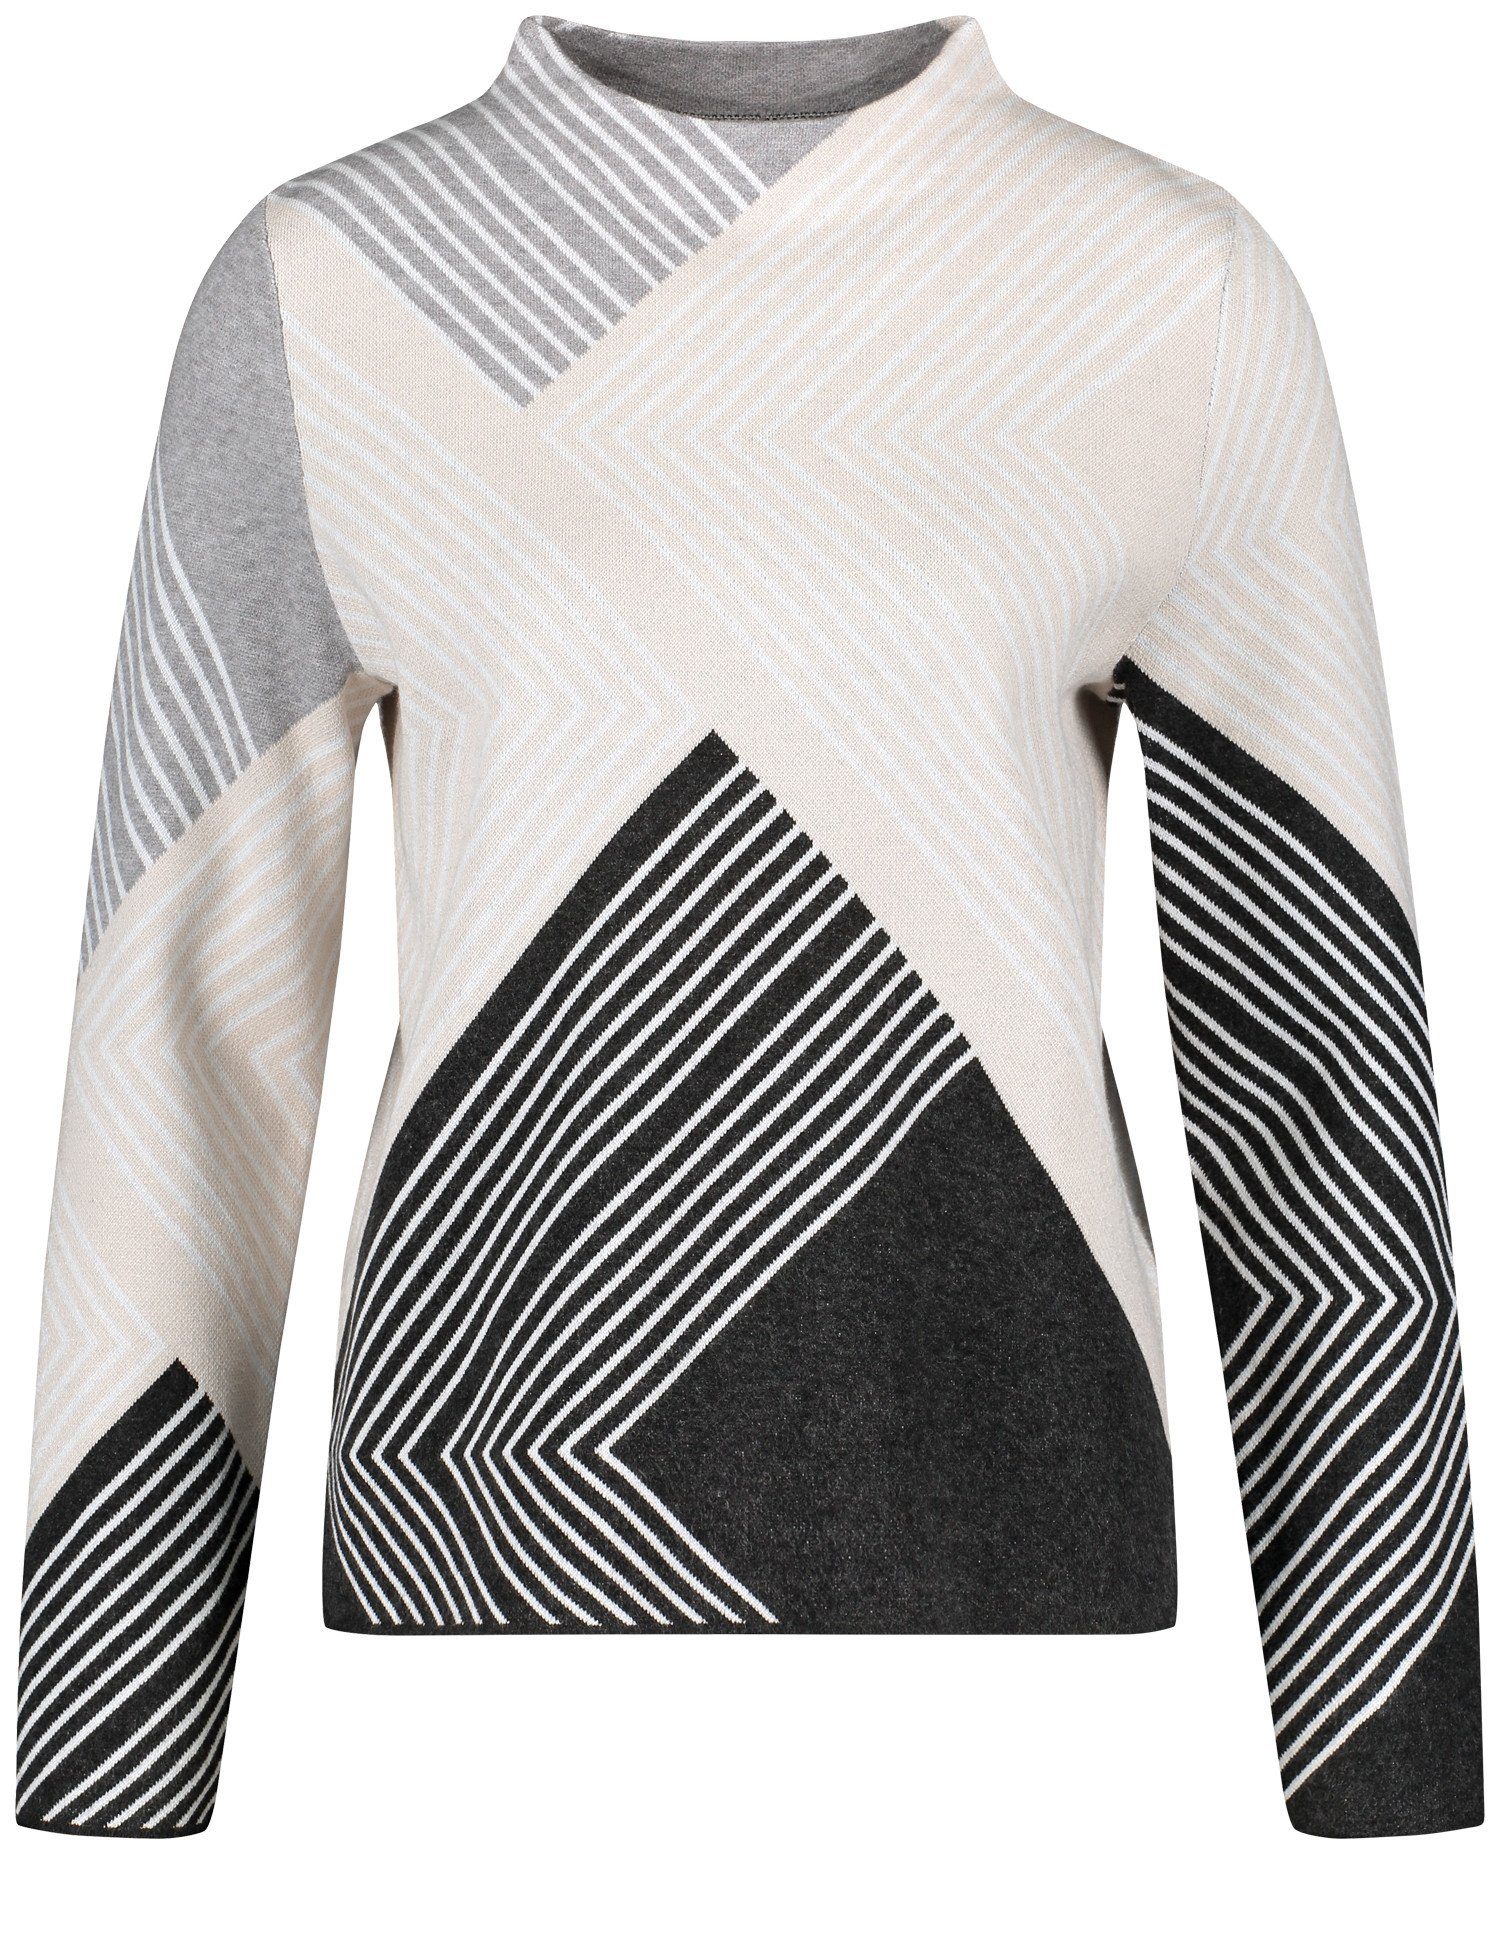 GERRY WEBER Strickpullover Pullover In Jaquard-optik Mit Grafischem Muster